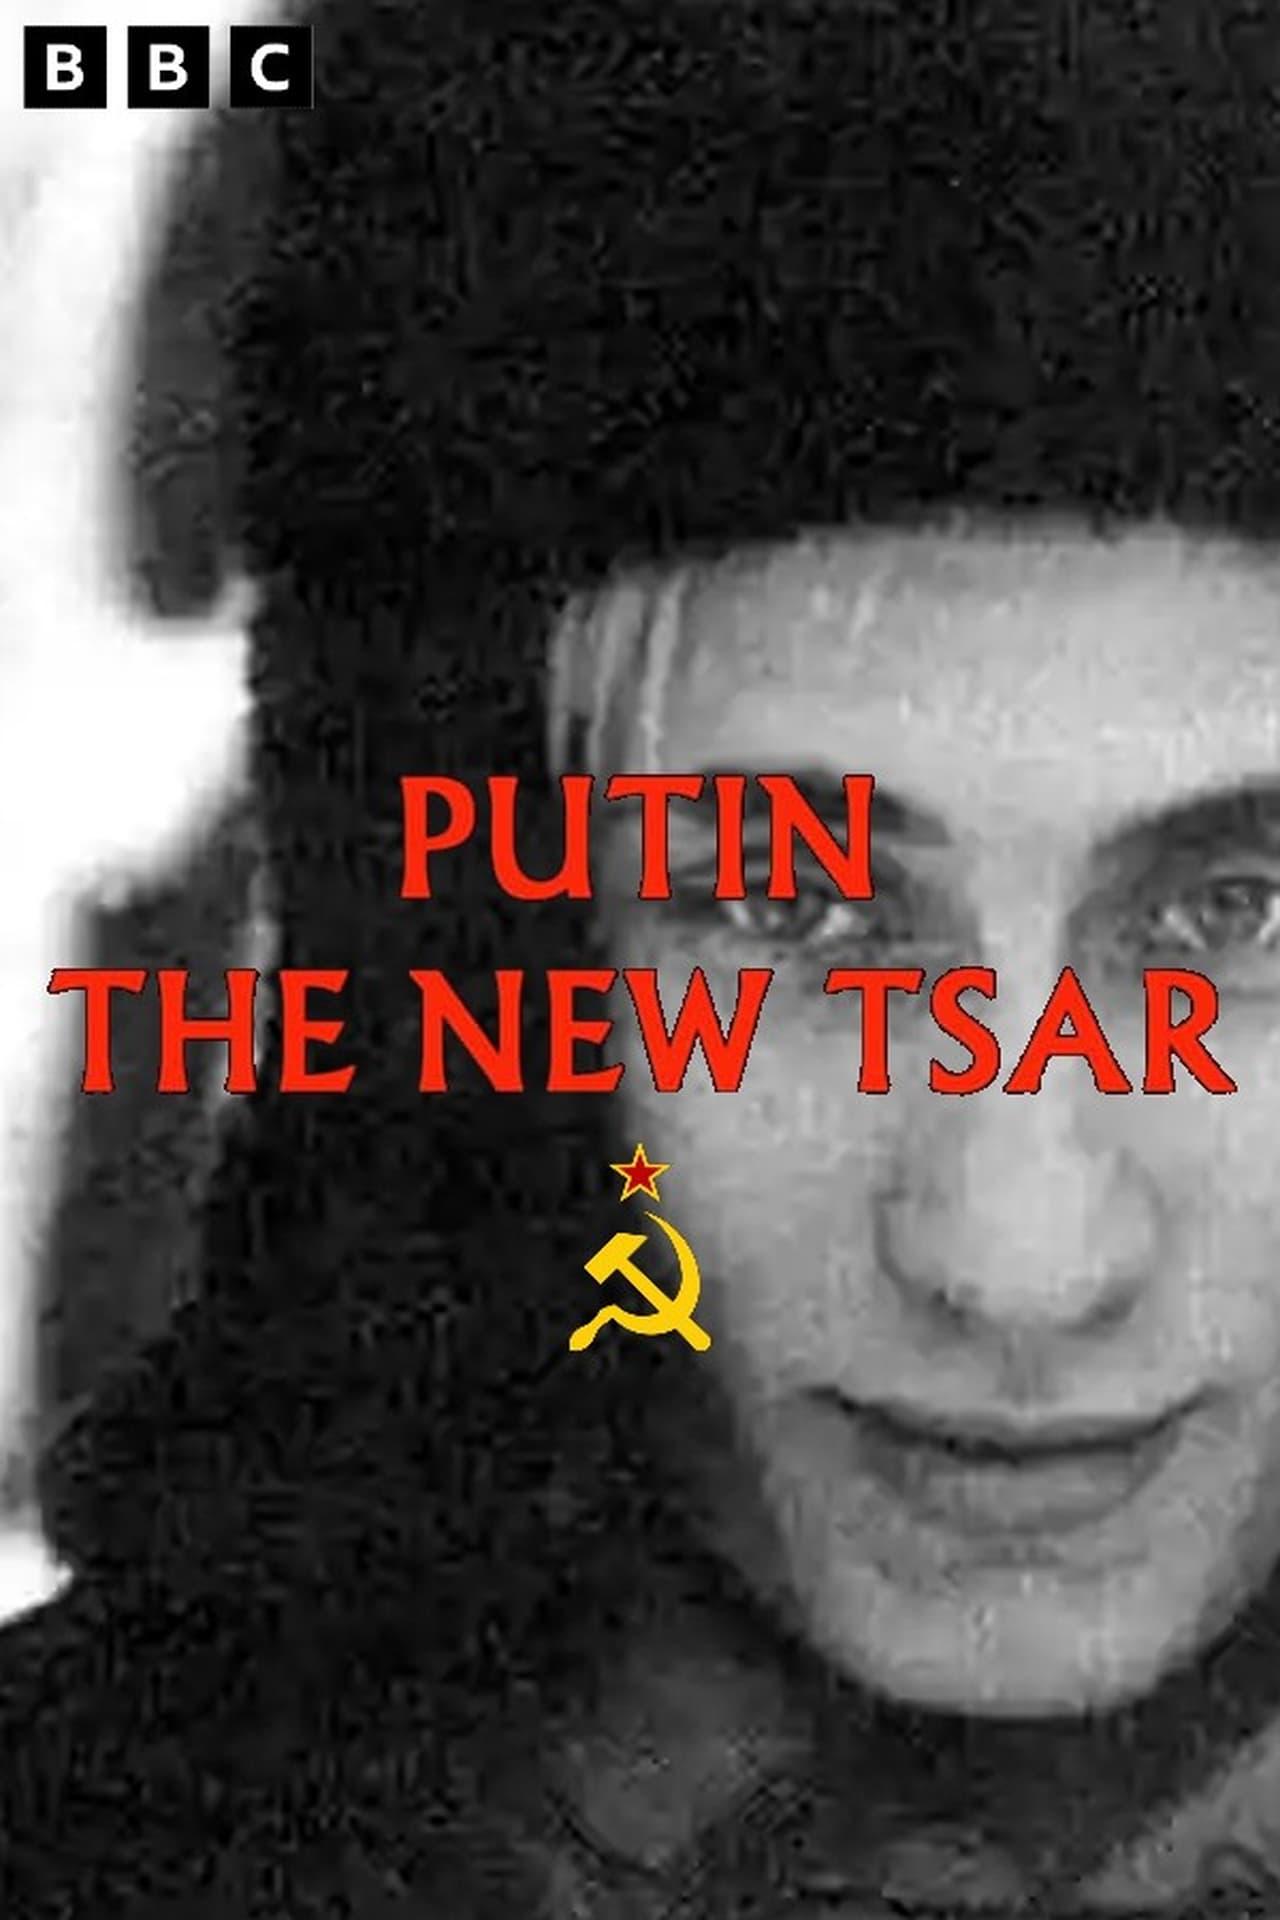 Putin: The New Tsar poster